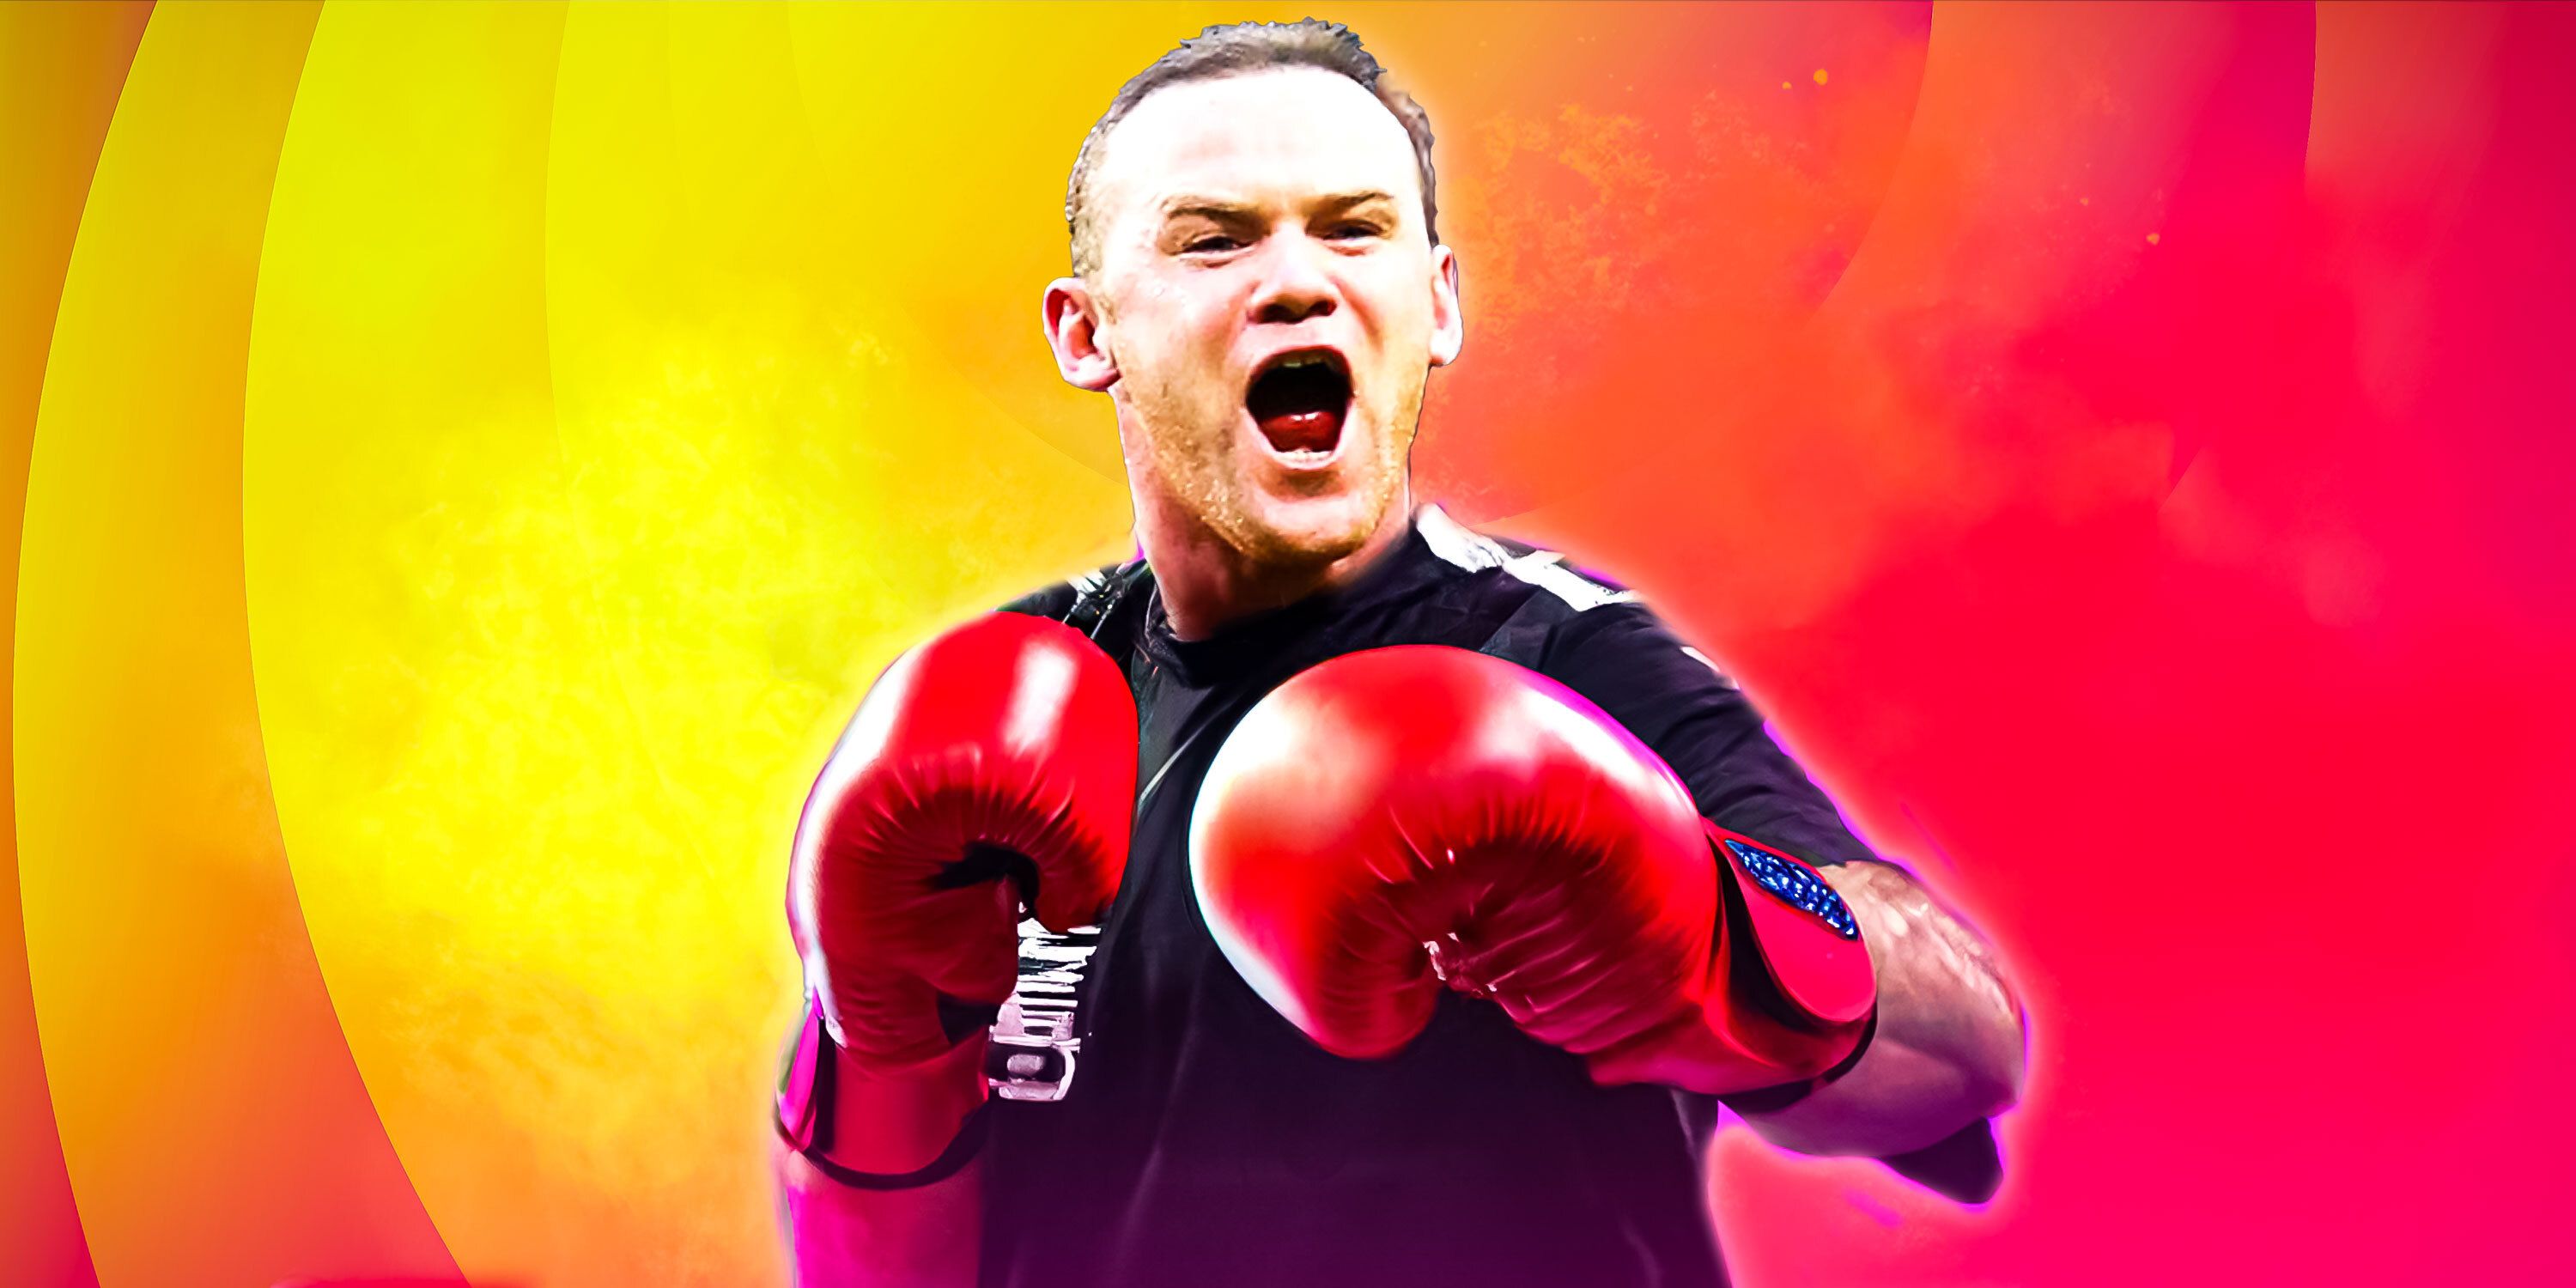 Wayne Rooney boxing